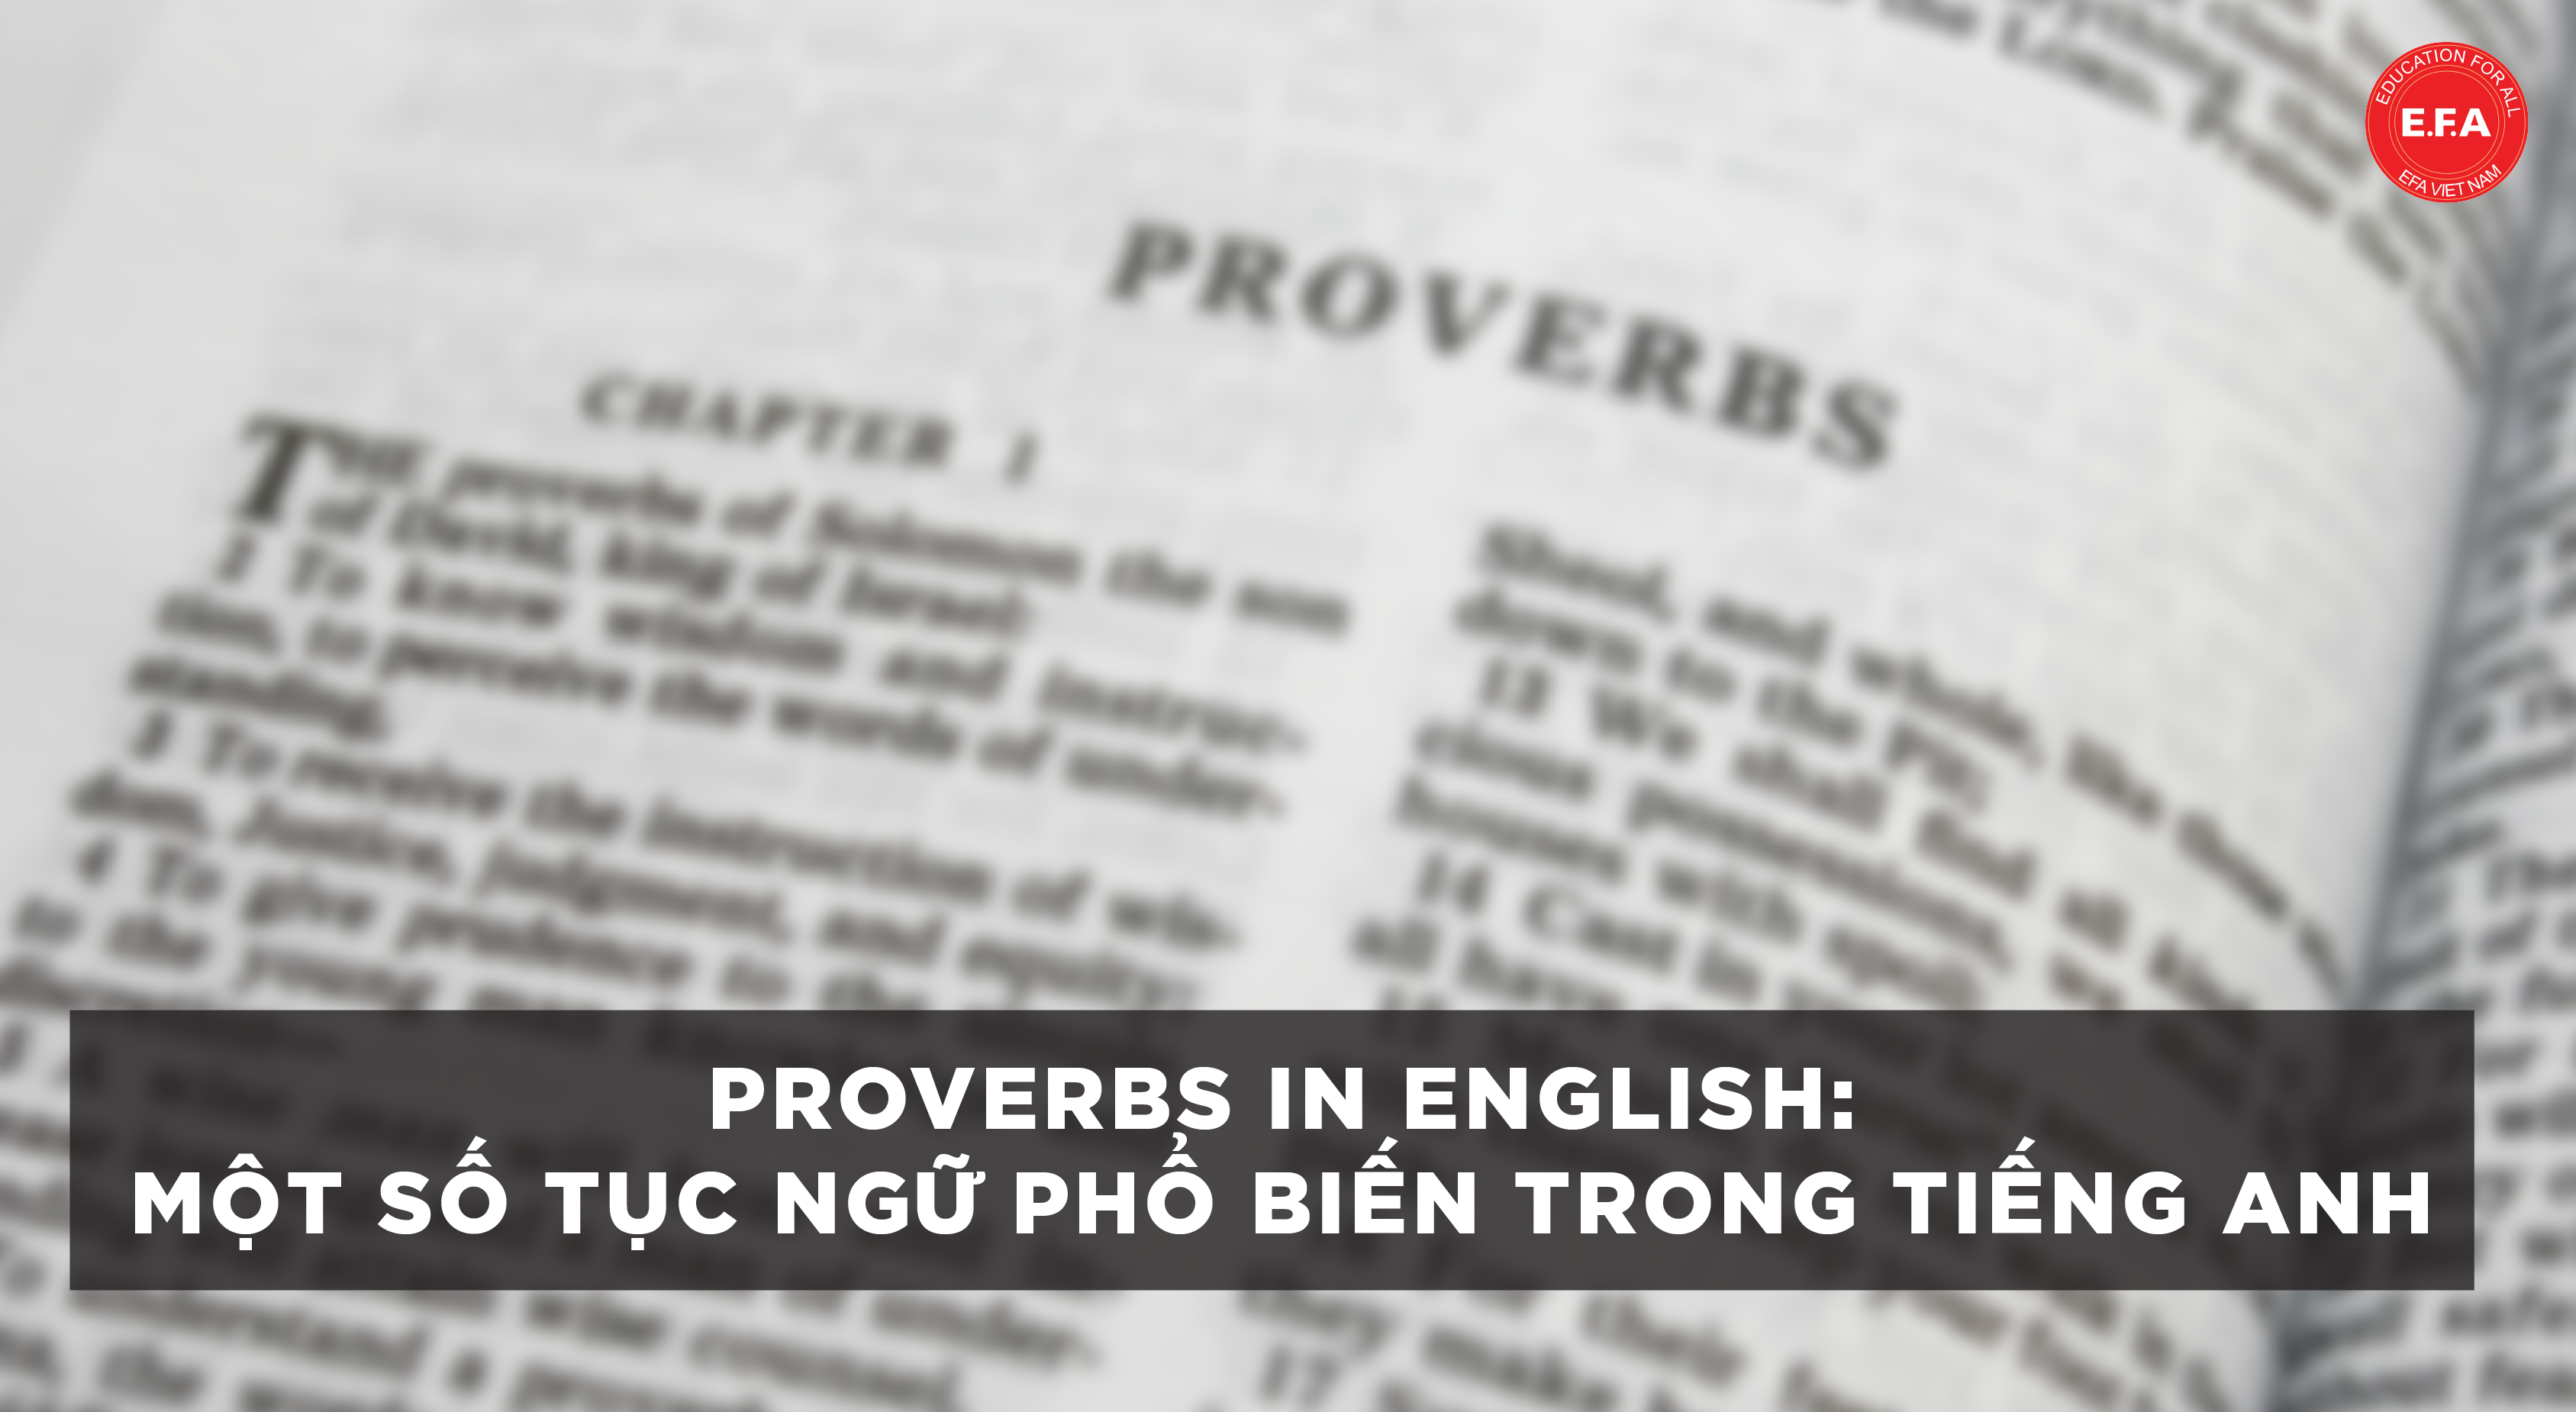 Proverbs in English